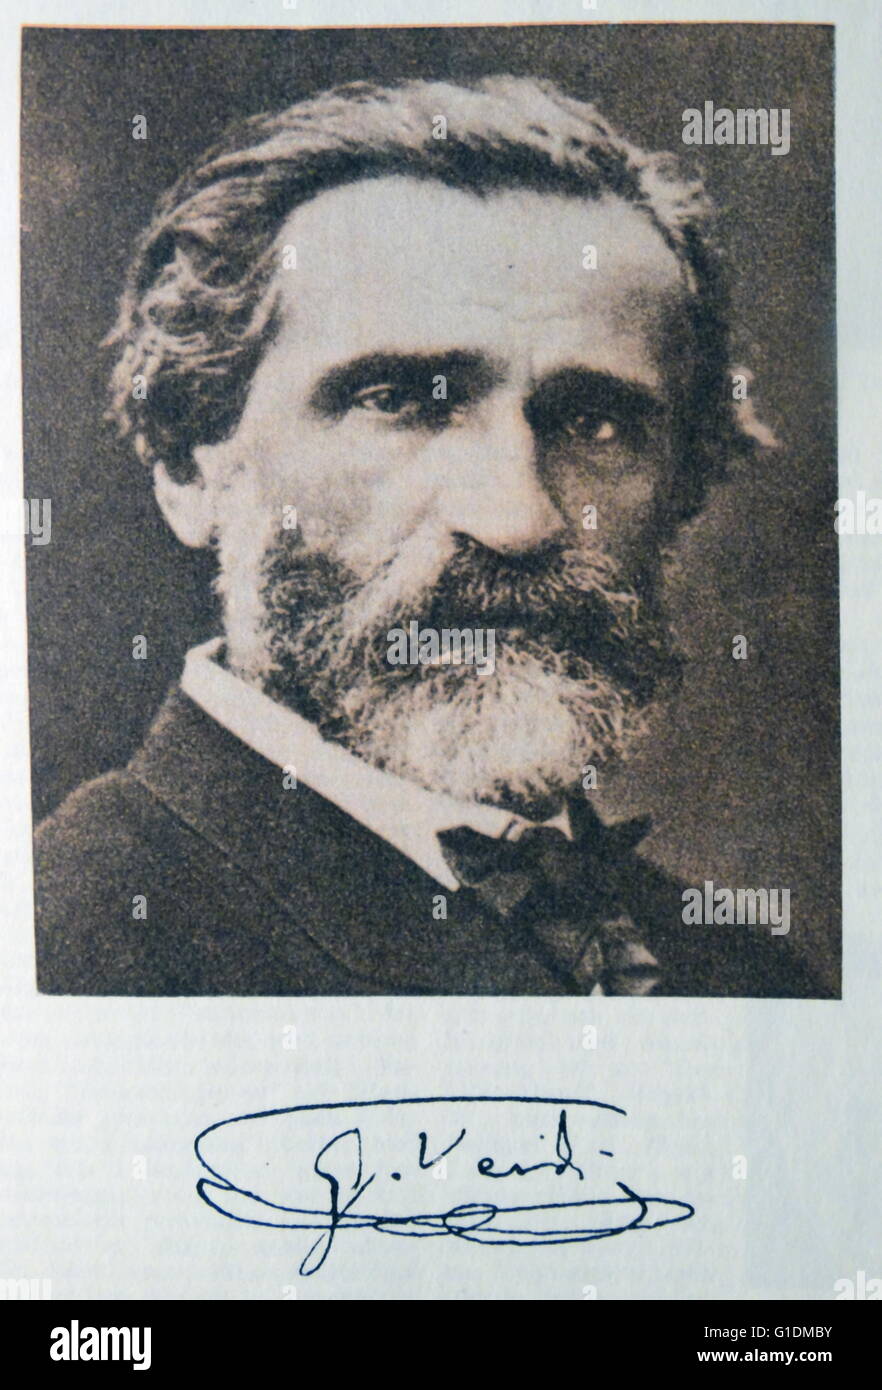 Giuseppe Verdi Nabucco High Resolution Stock Photography and Images - Alamy